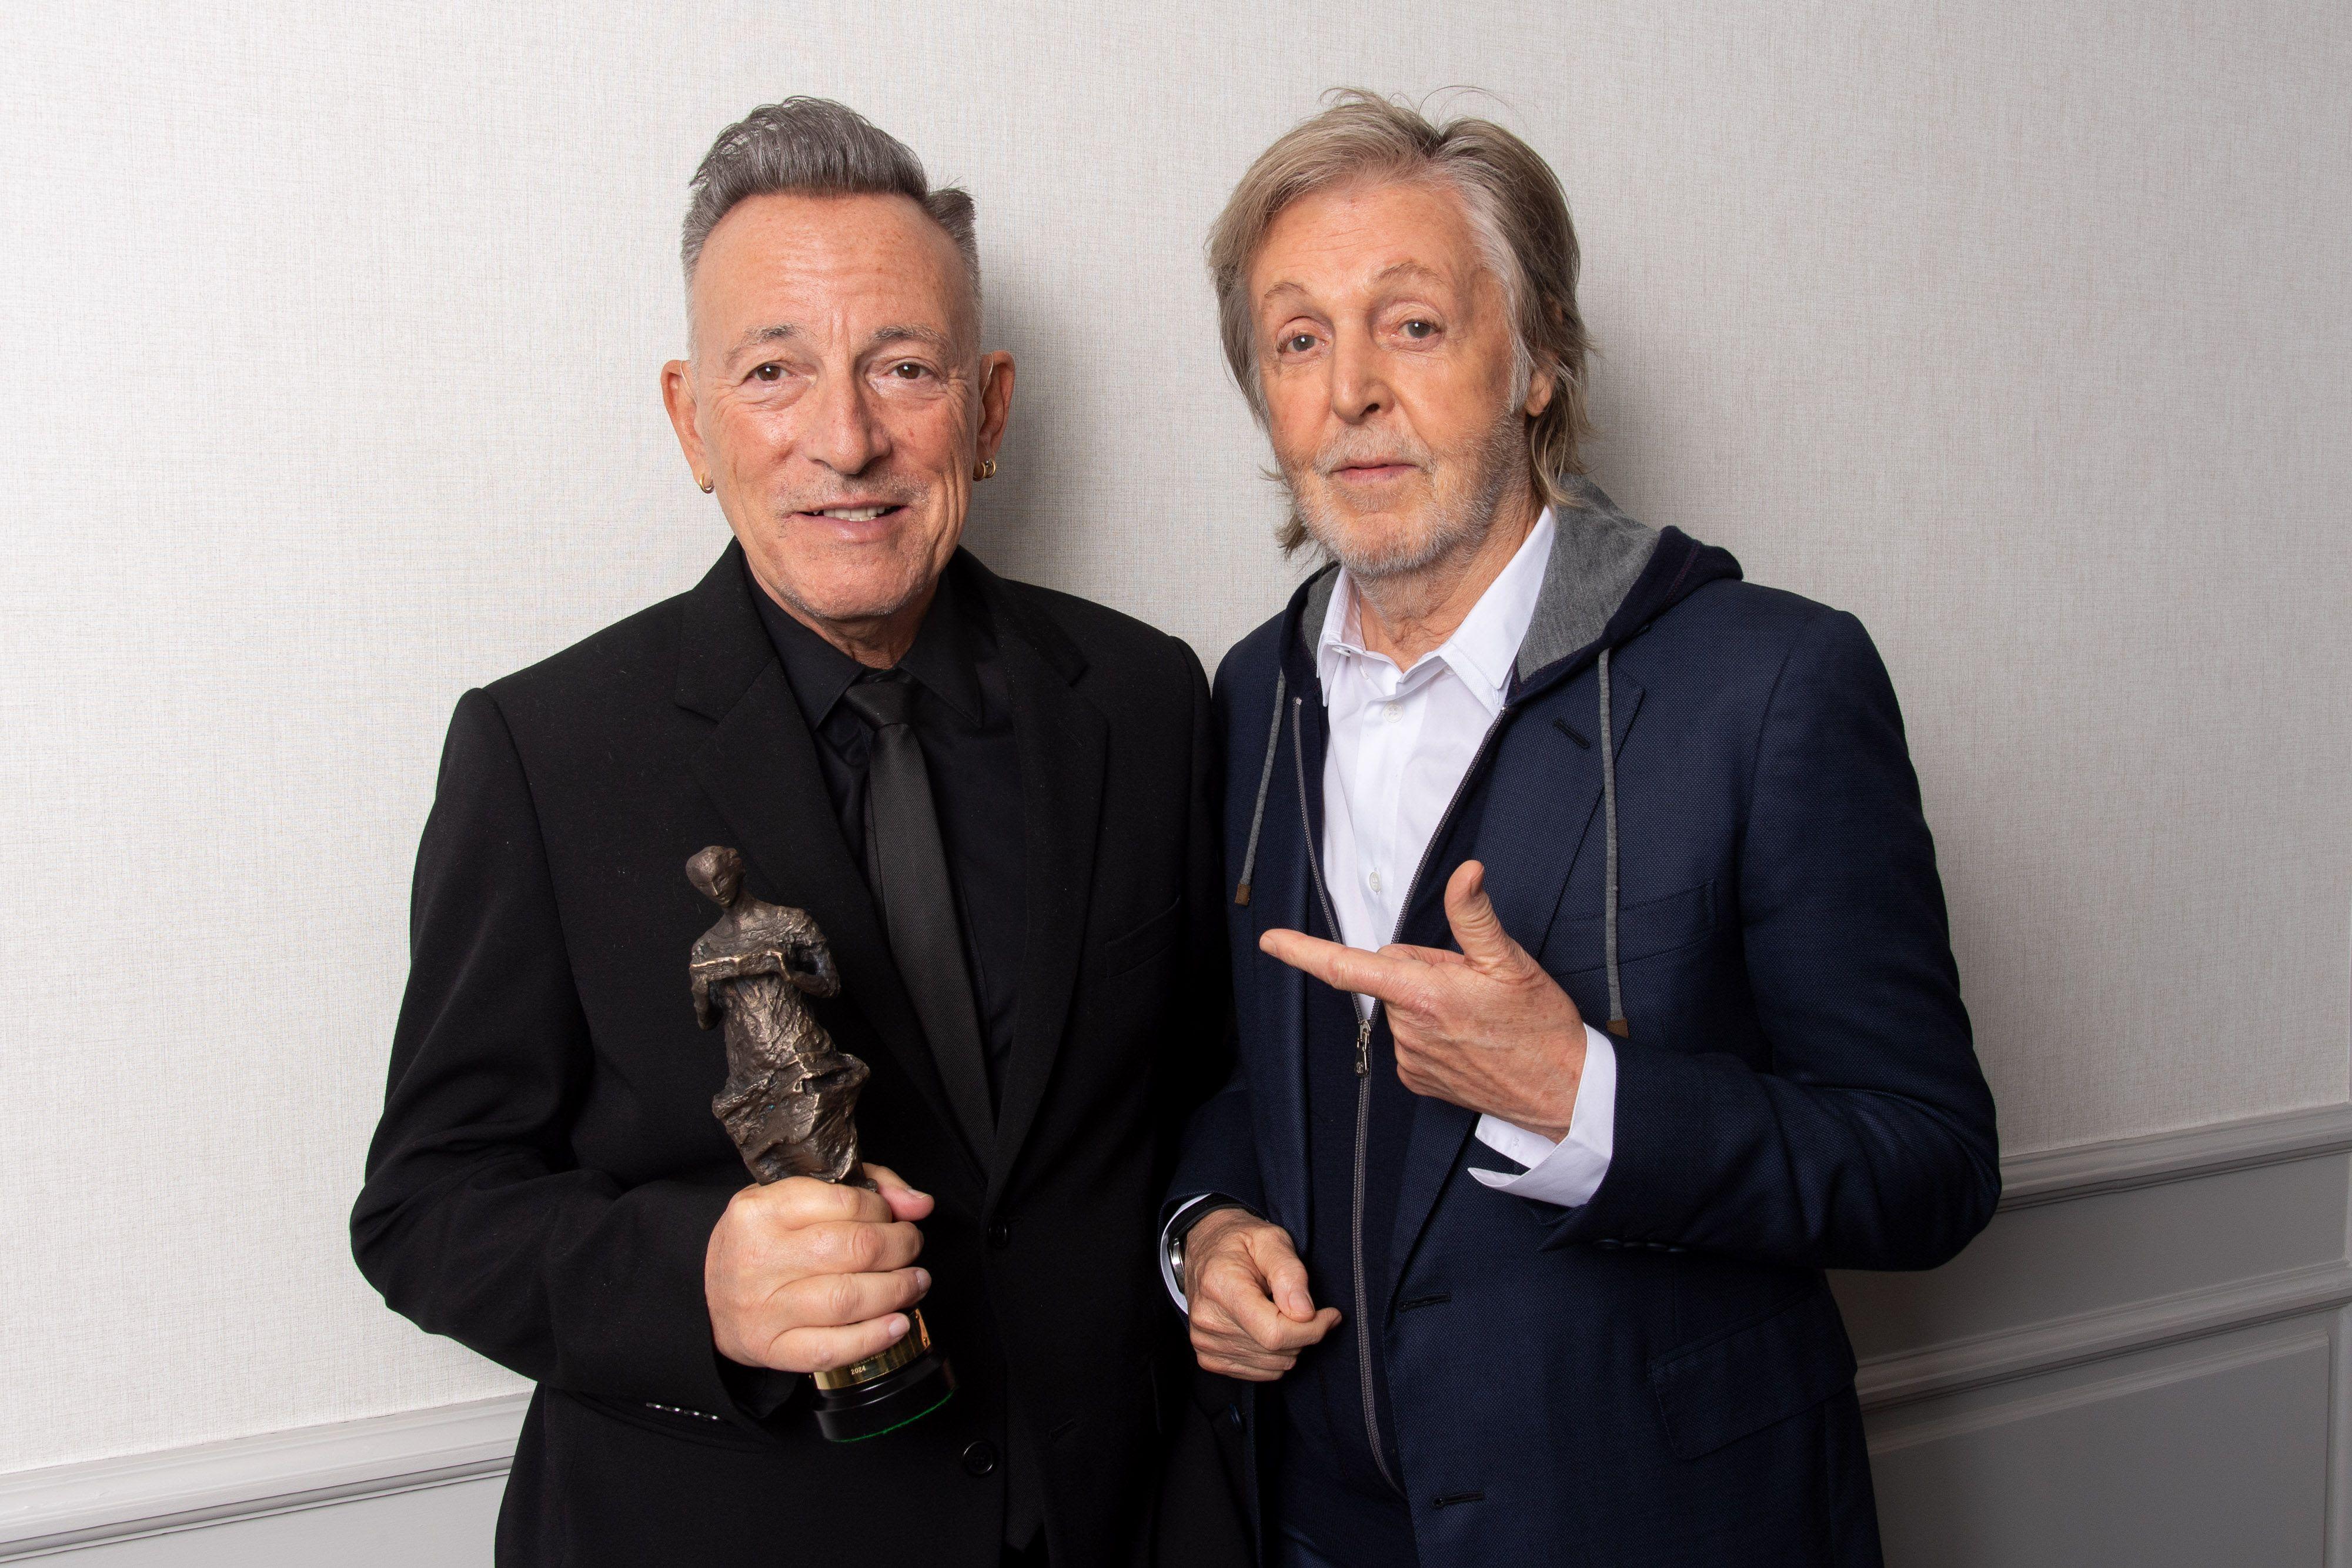 McCartney roasts Springsteen at Ivor Awards